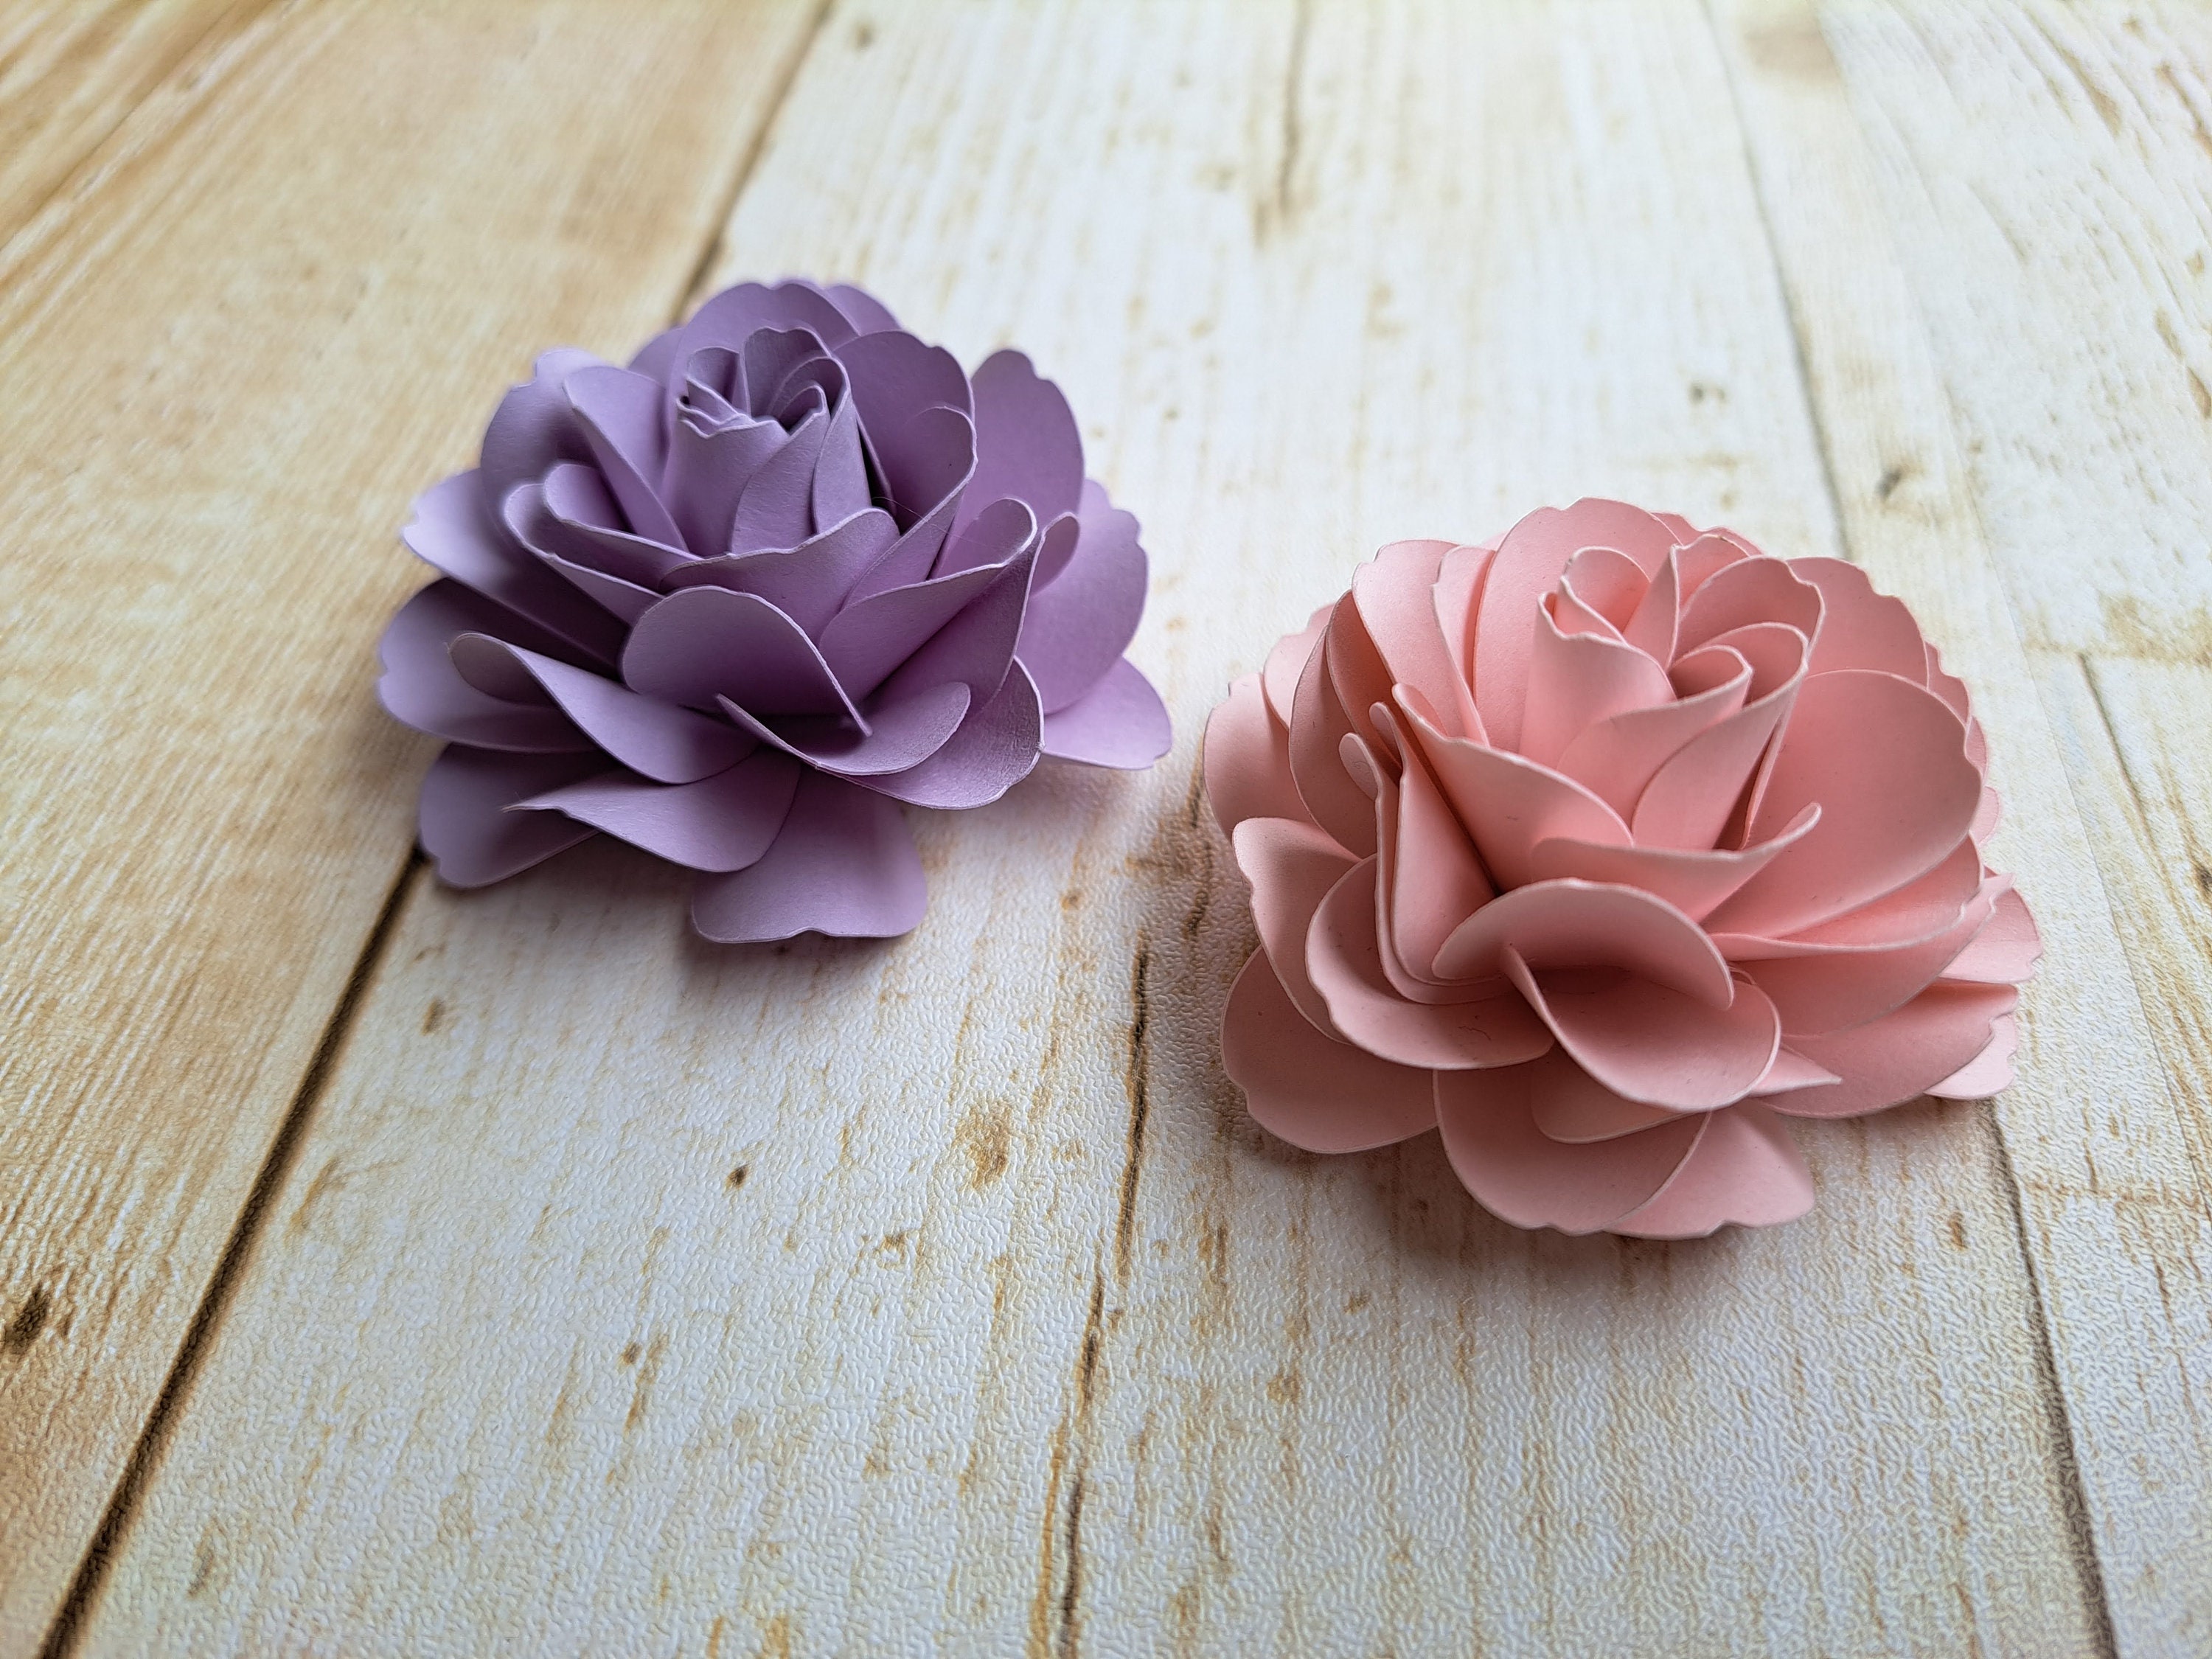  100 pcs Flat Paper Flowers for Crafts 25mm Mini